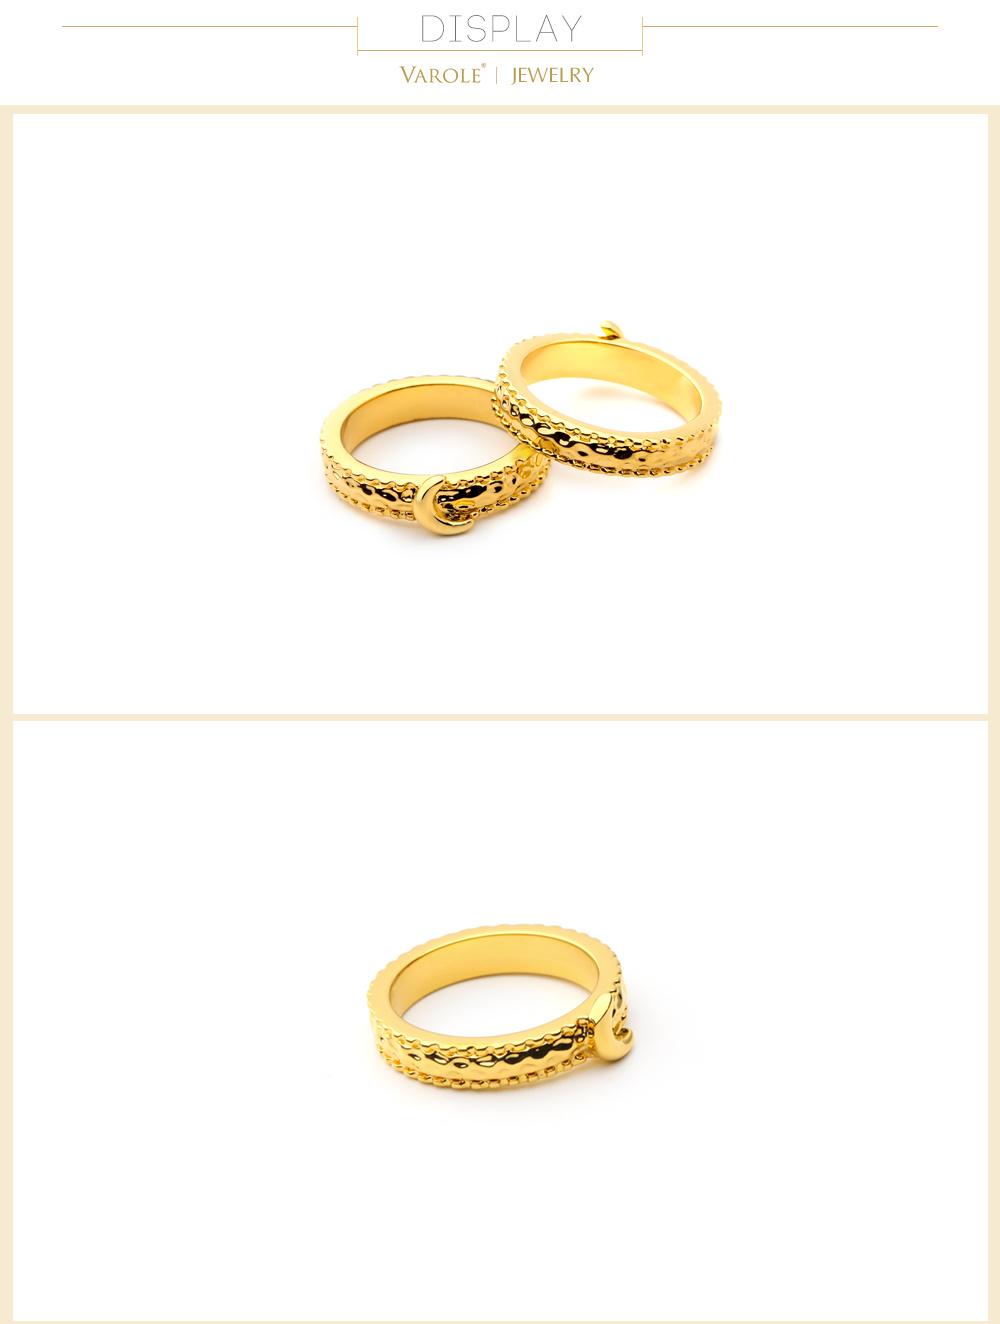 Hot Sale Popular Copper Wedding Jewelry Fashion Moon Finger Ring